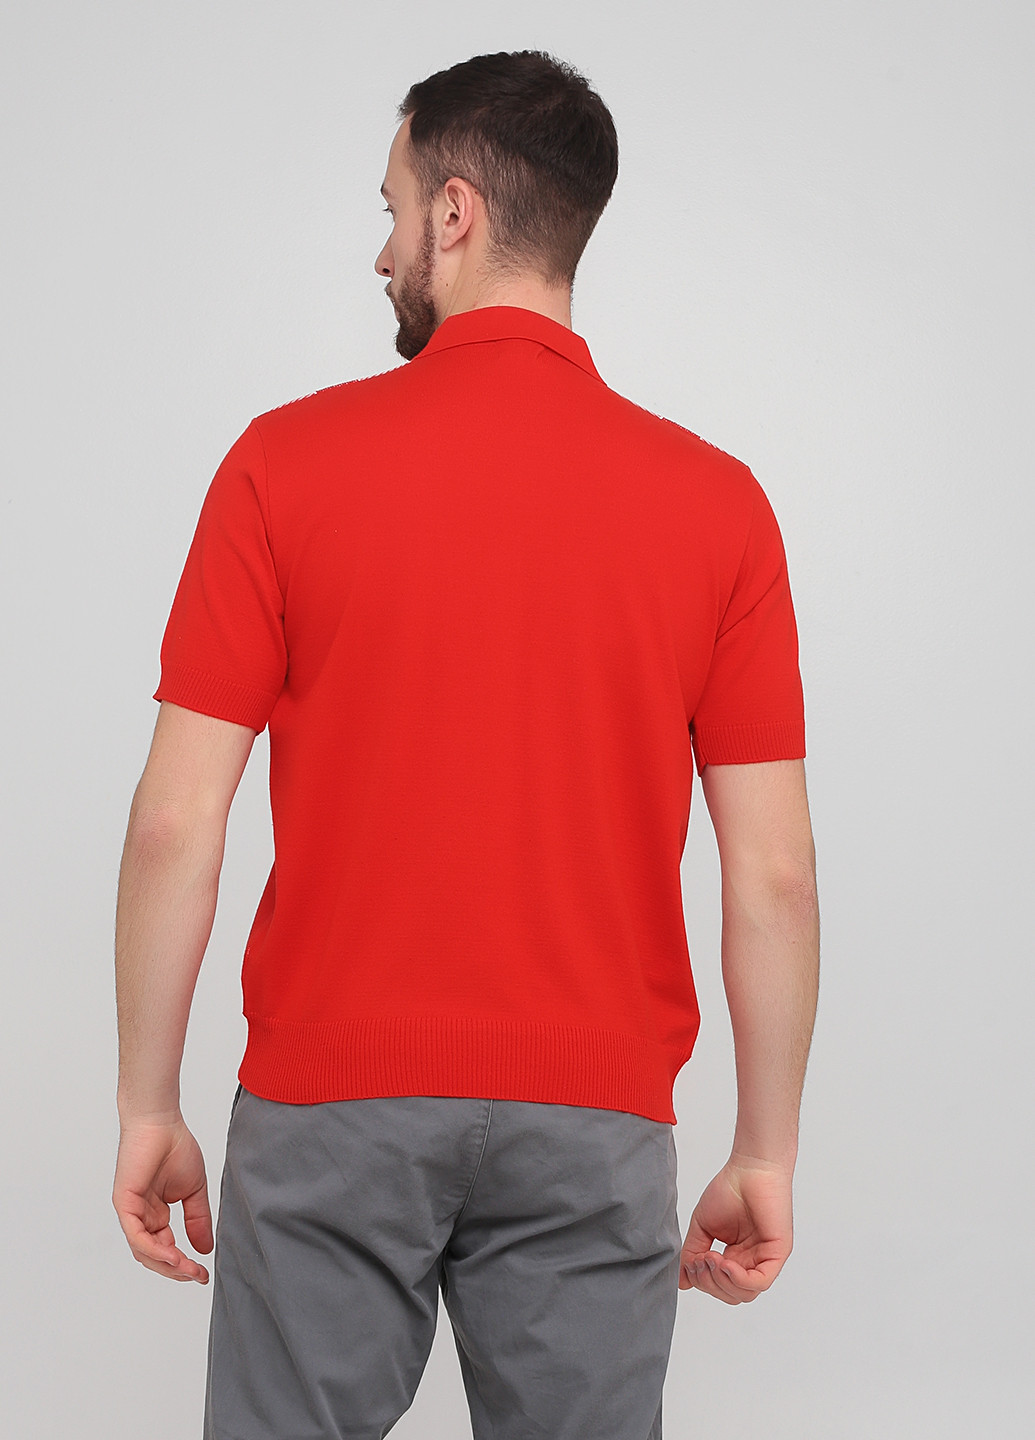 Красная футболка-поло для мужчин Doxman с геометрическим узором